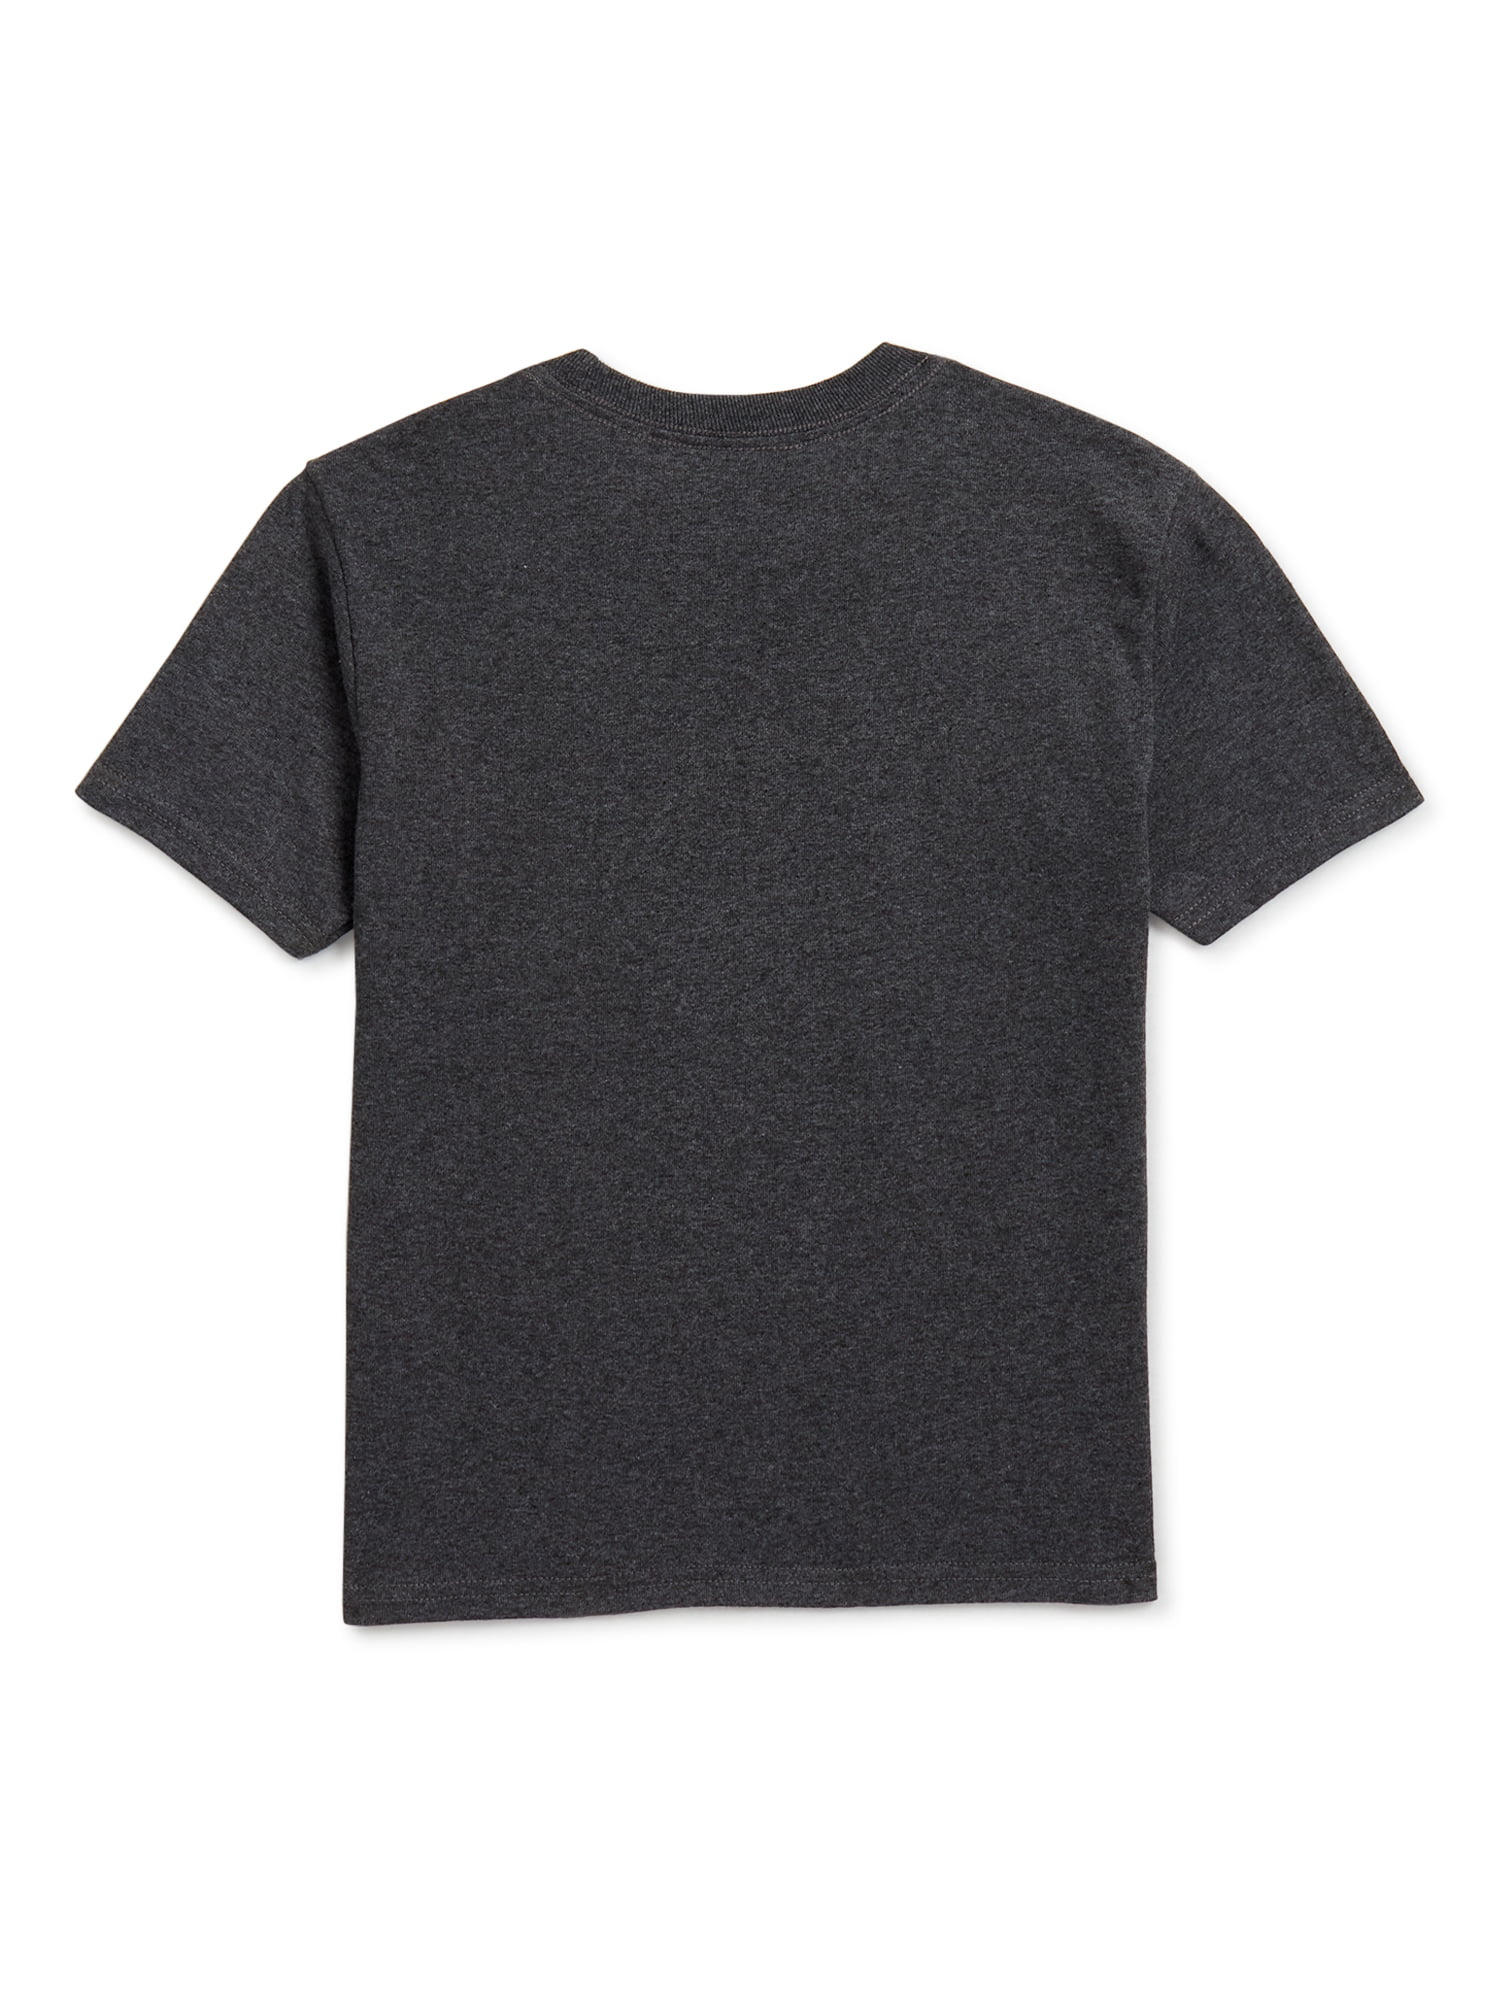 ⚡⚡⚡ Boys Black Roblox T-Shirt Size XL (s18) RN# 115665 - FREE SHIPPING ⚡⚡⚡